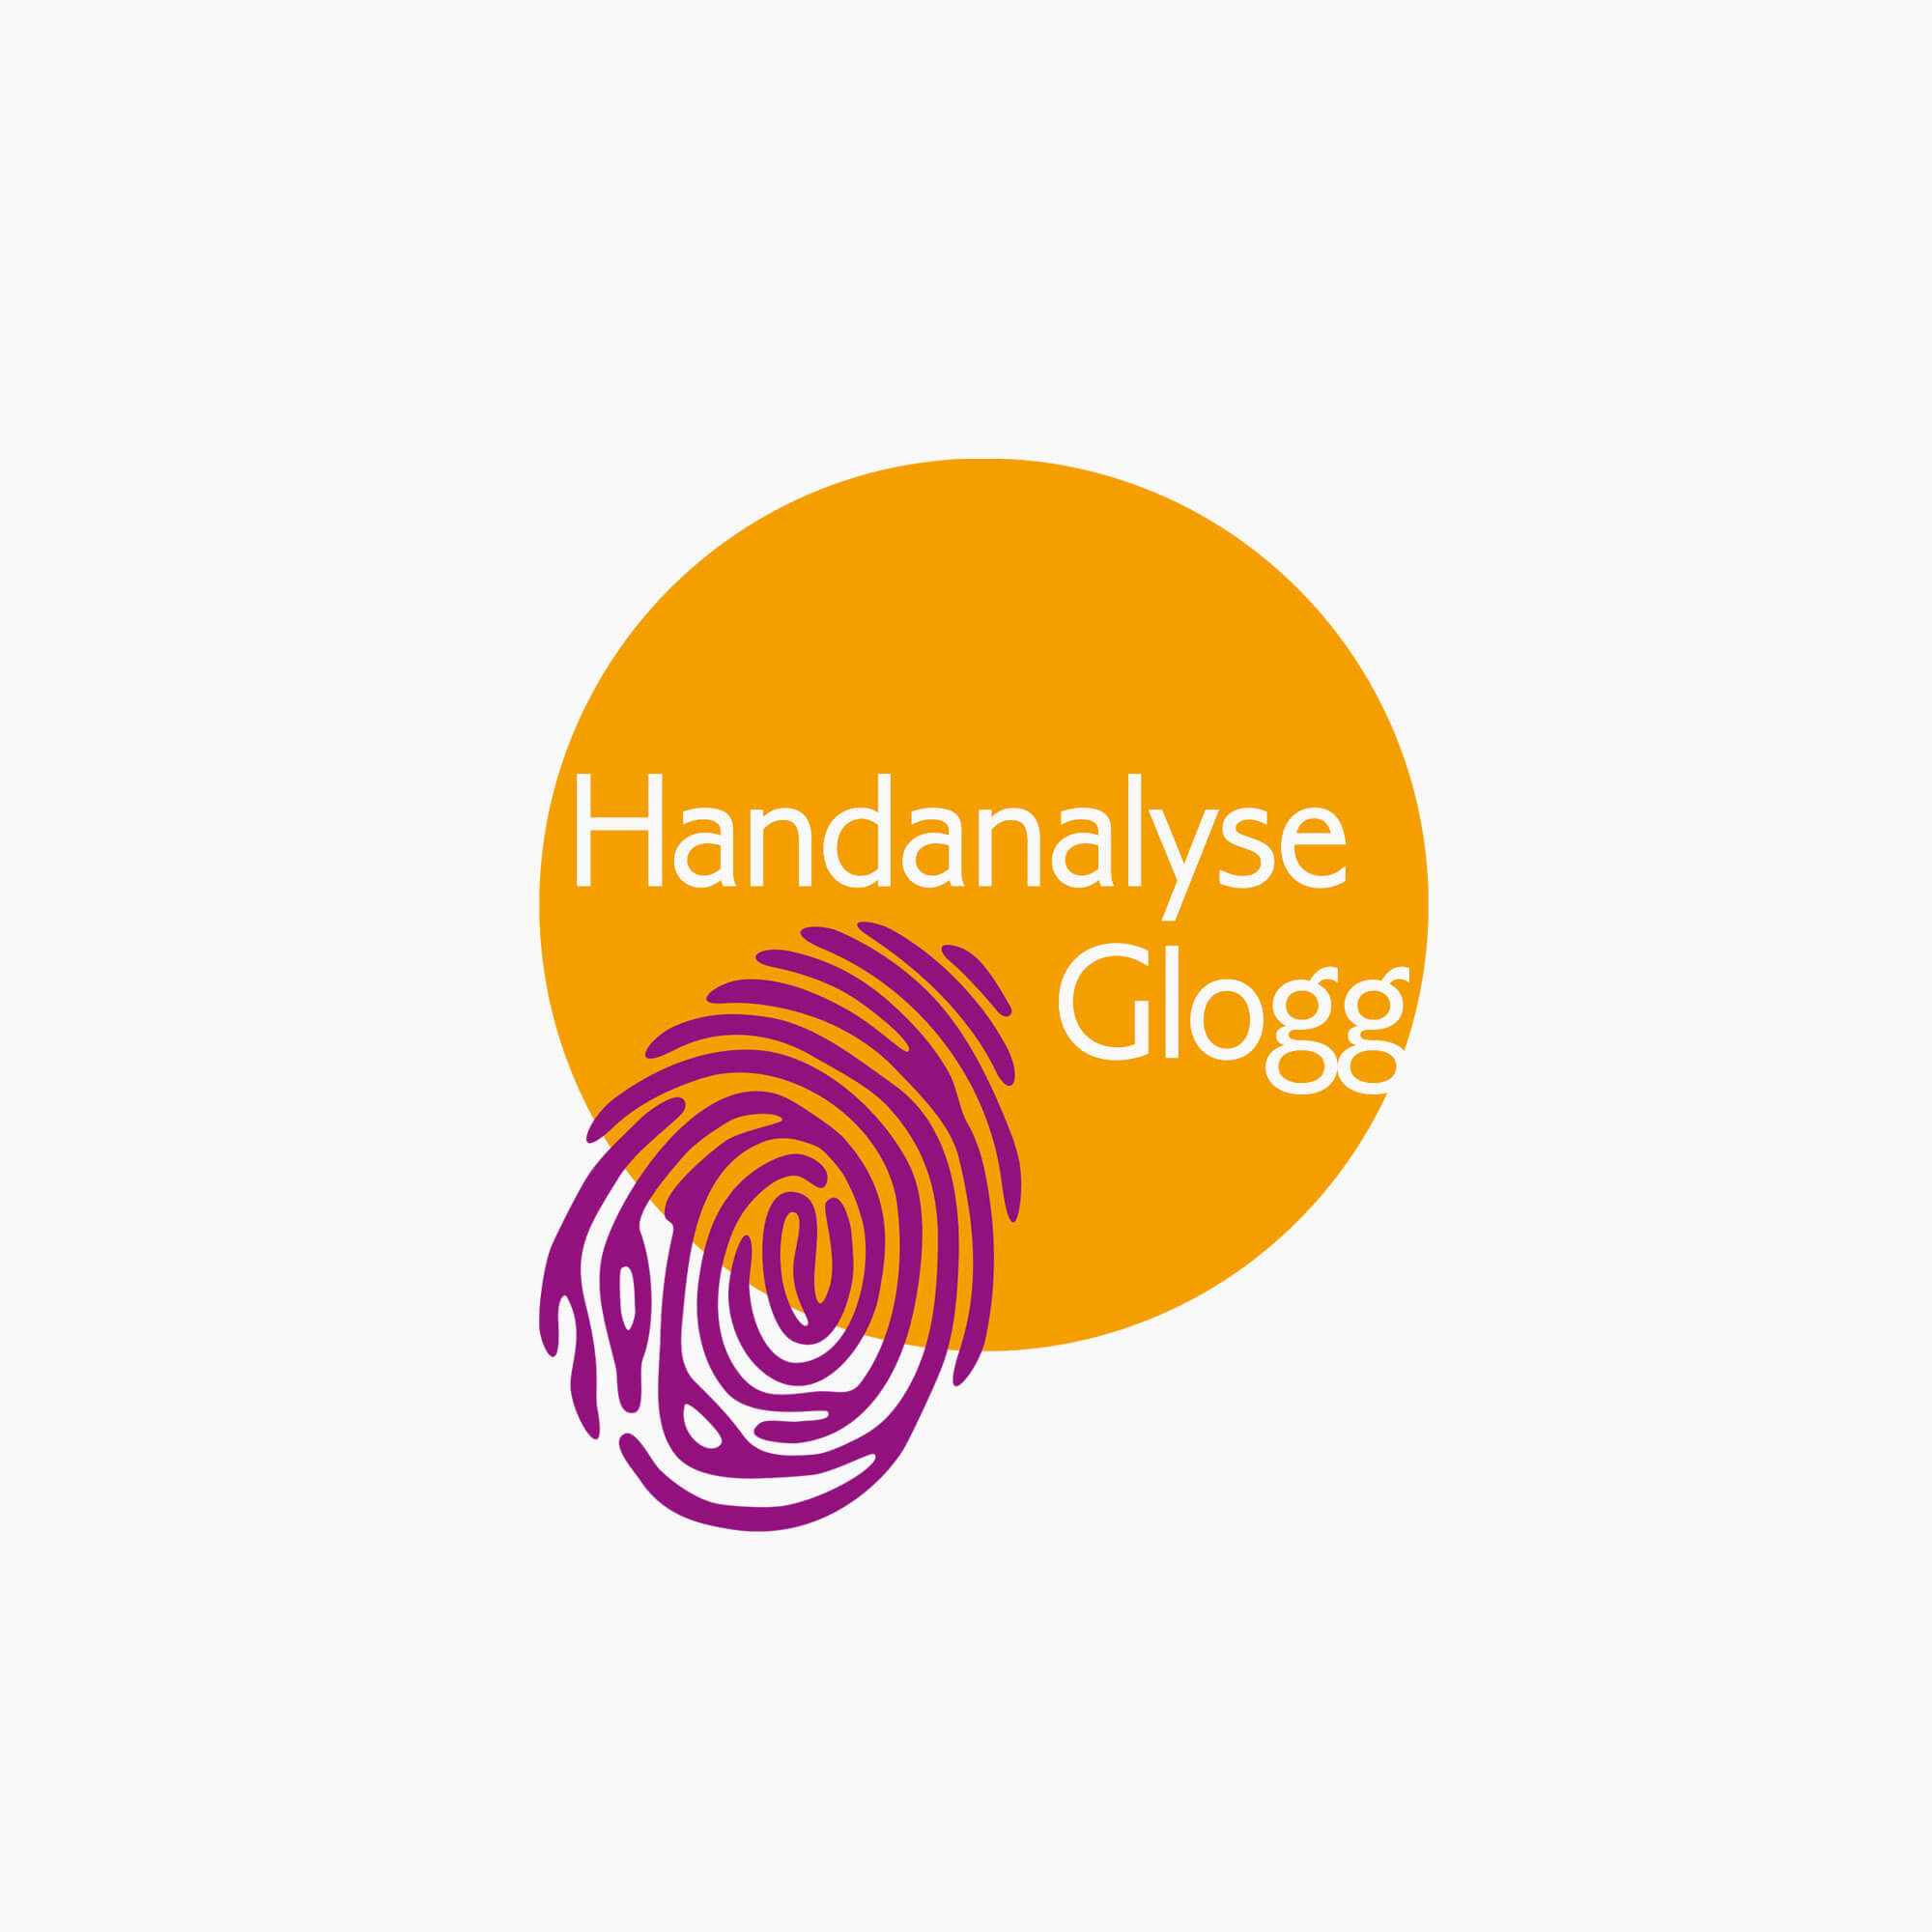 Handanalyse Glogg Logo